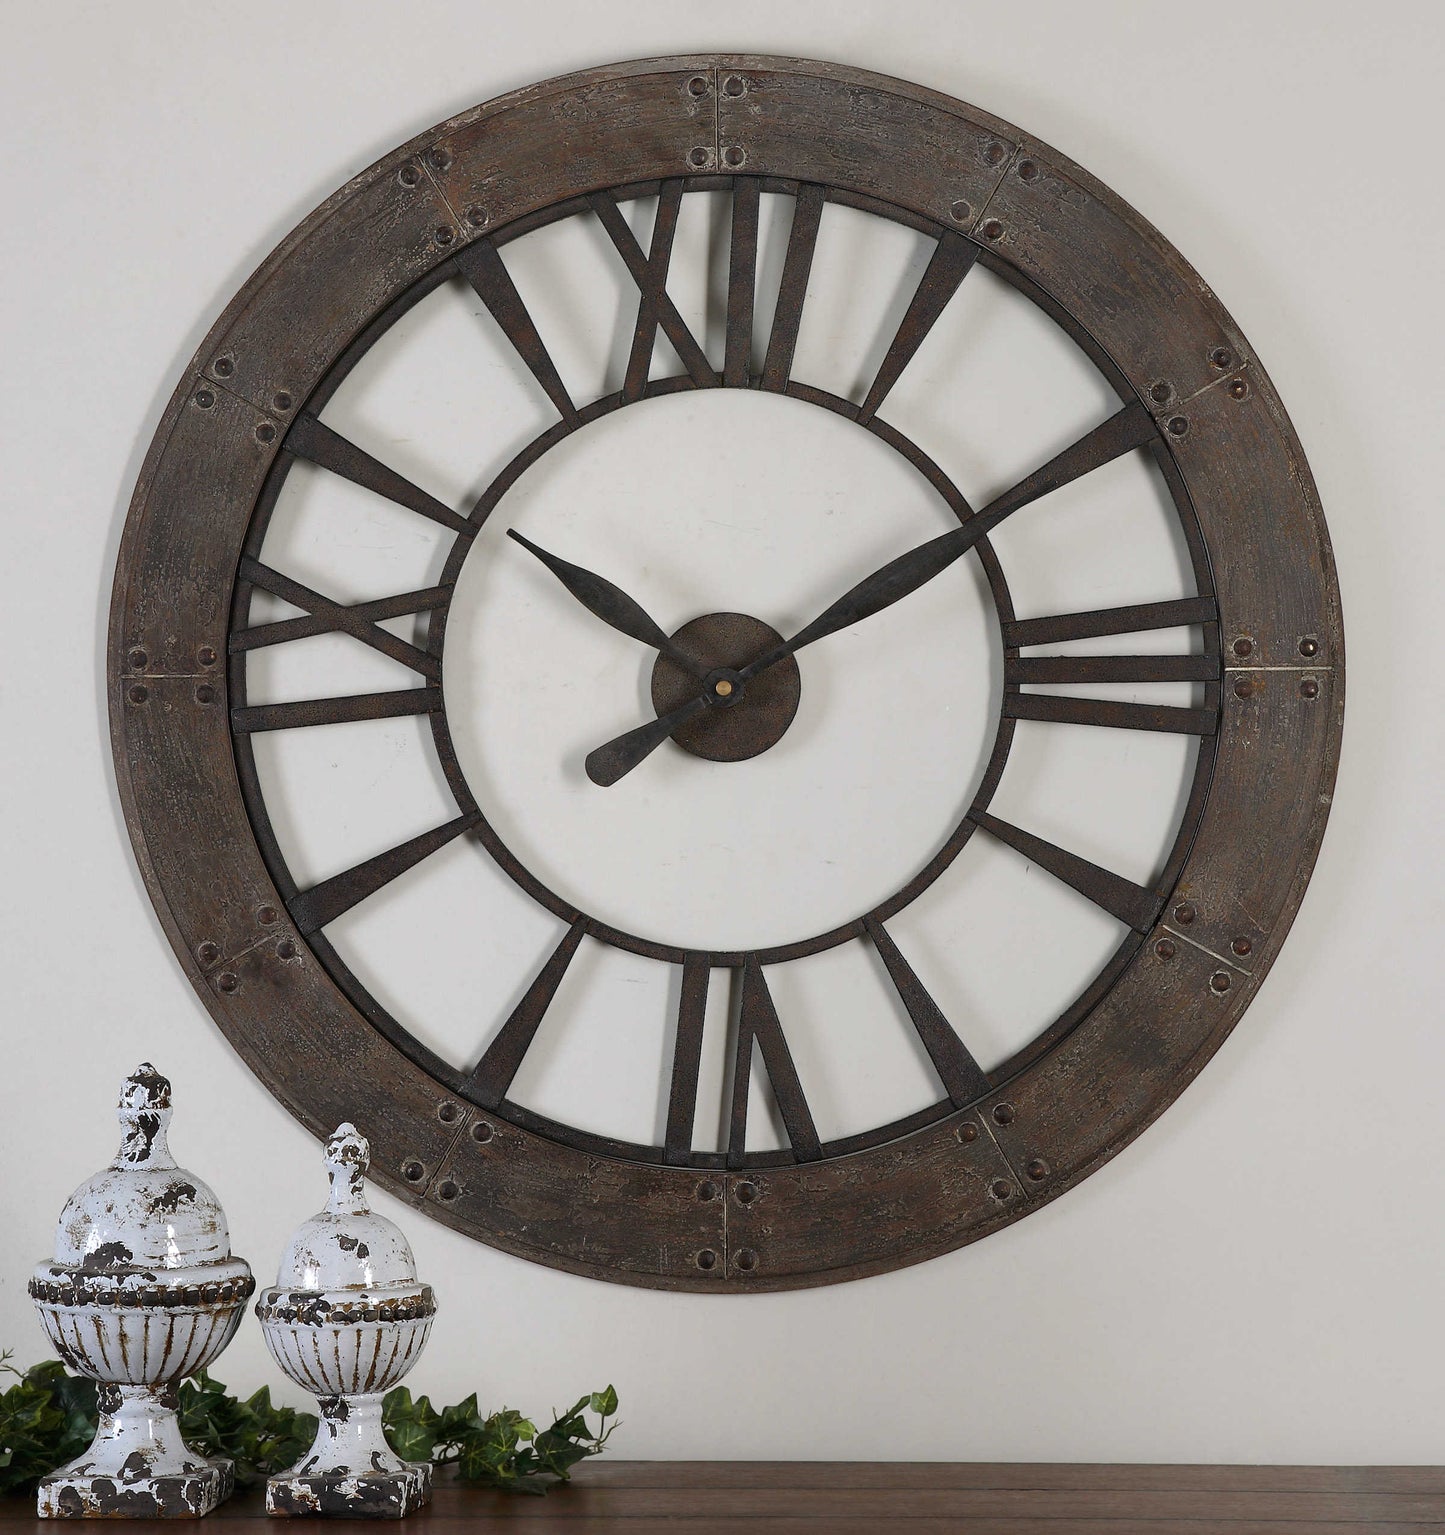 The Ronan Wall Clock